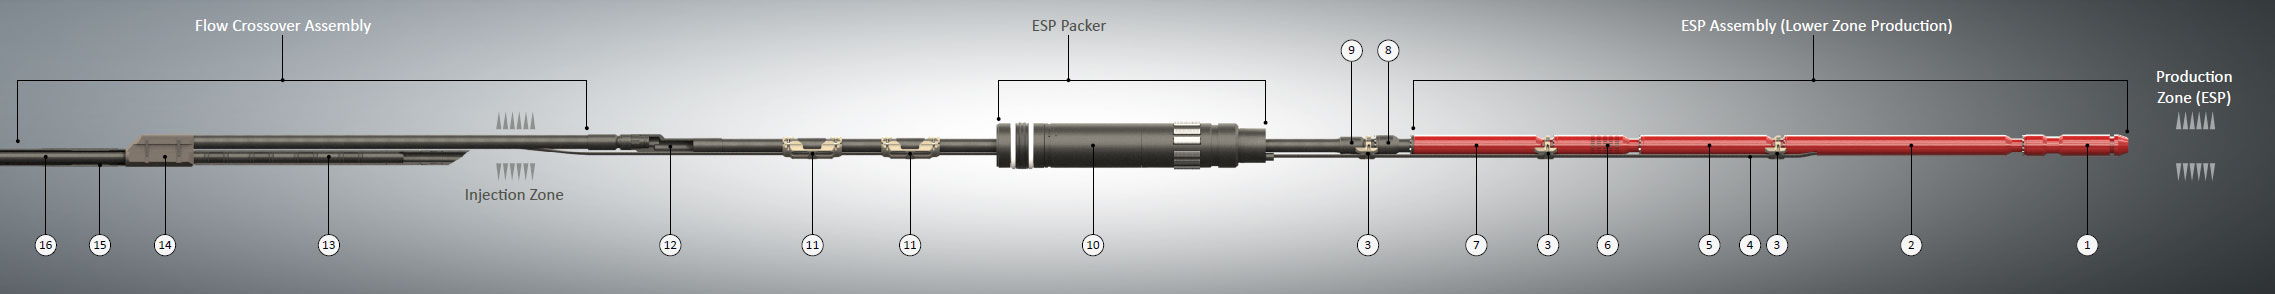 Upper Zone Injection / Lower Zone ESP (ESP Packer)